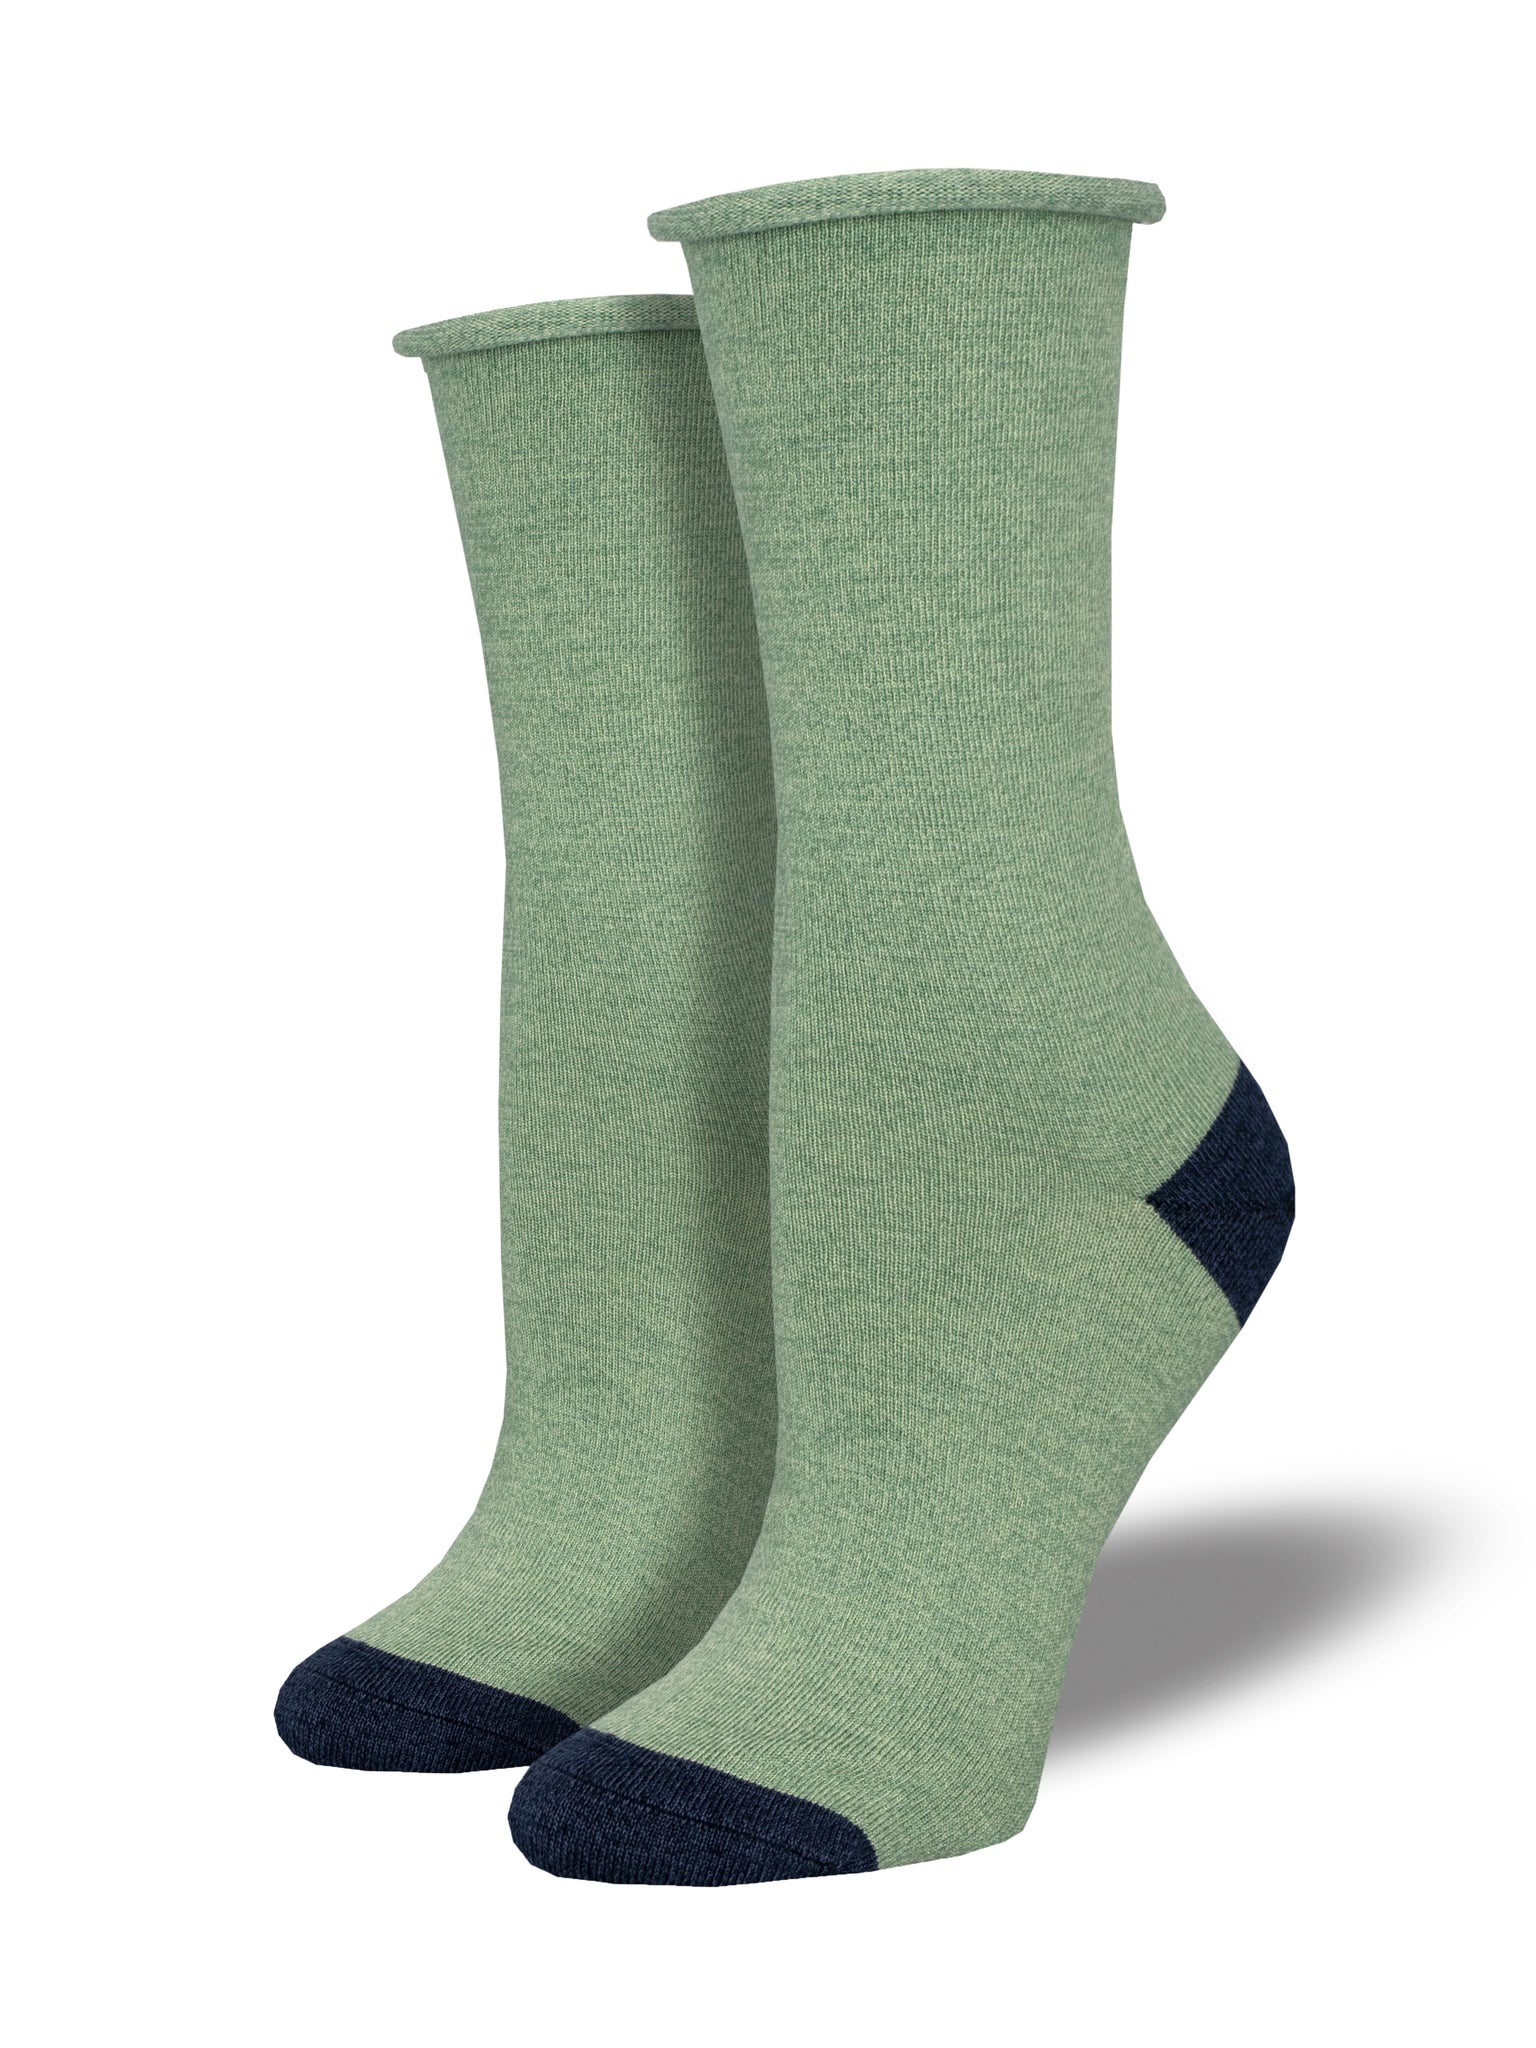 Contrast Heel Toe | Bamboo | Mint Heather - Socks - Socksmith